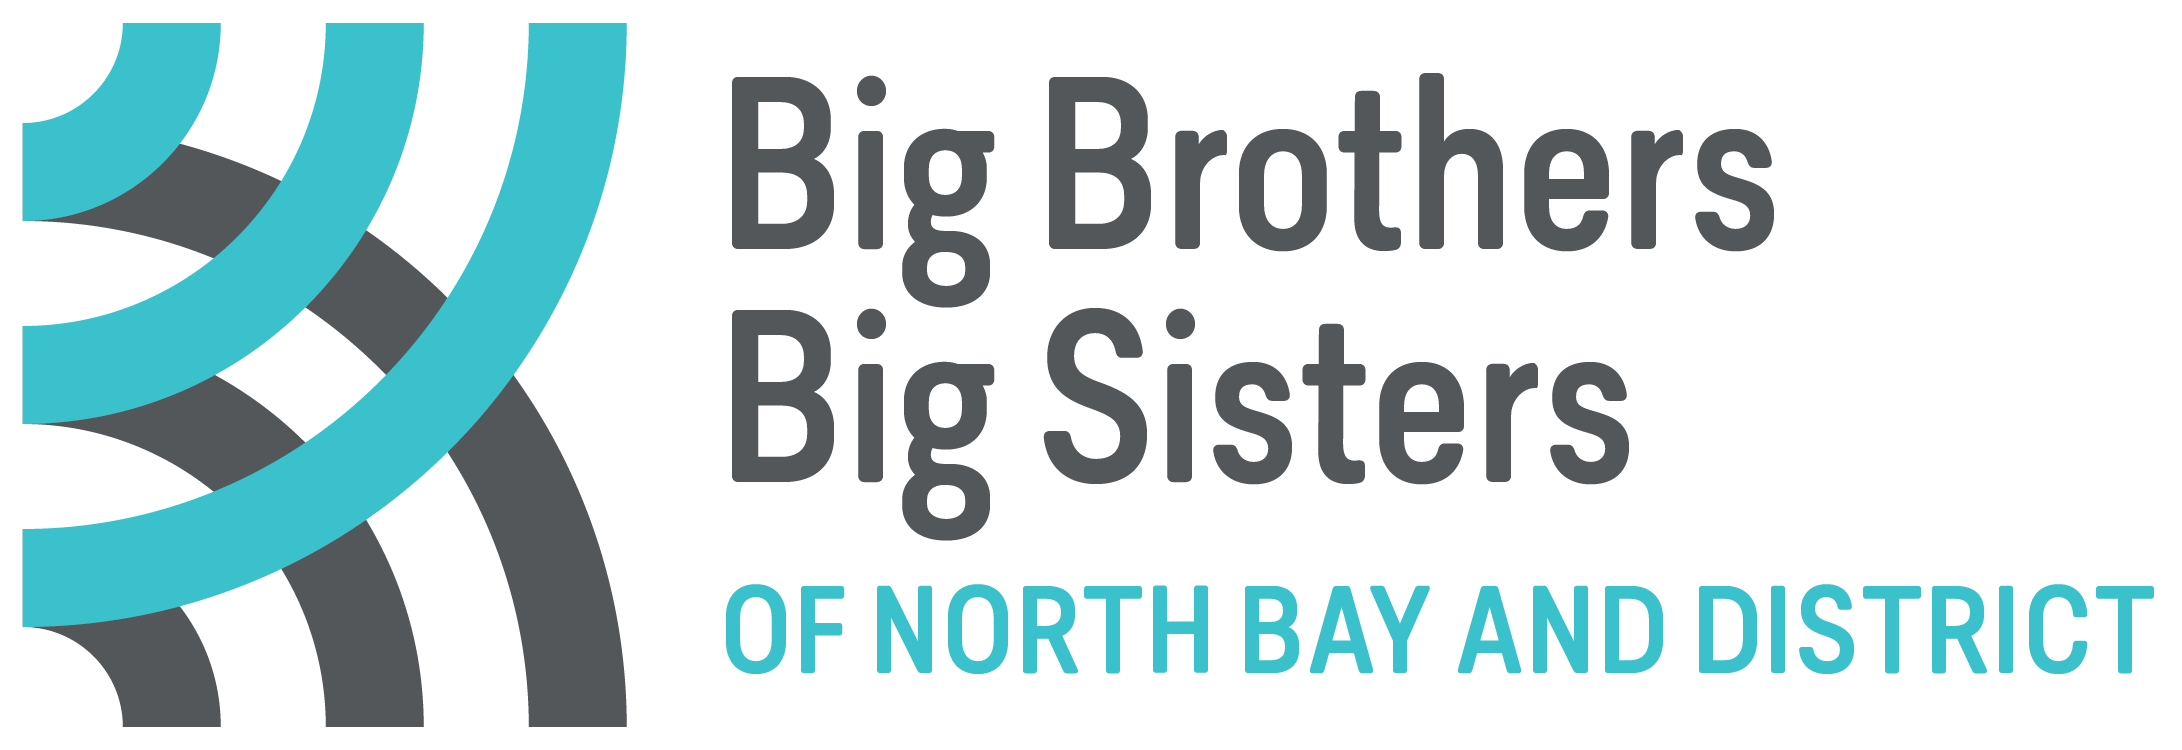 Big Borthers Big Sisters logo